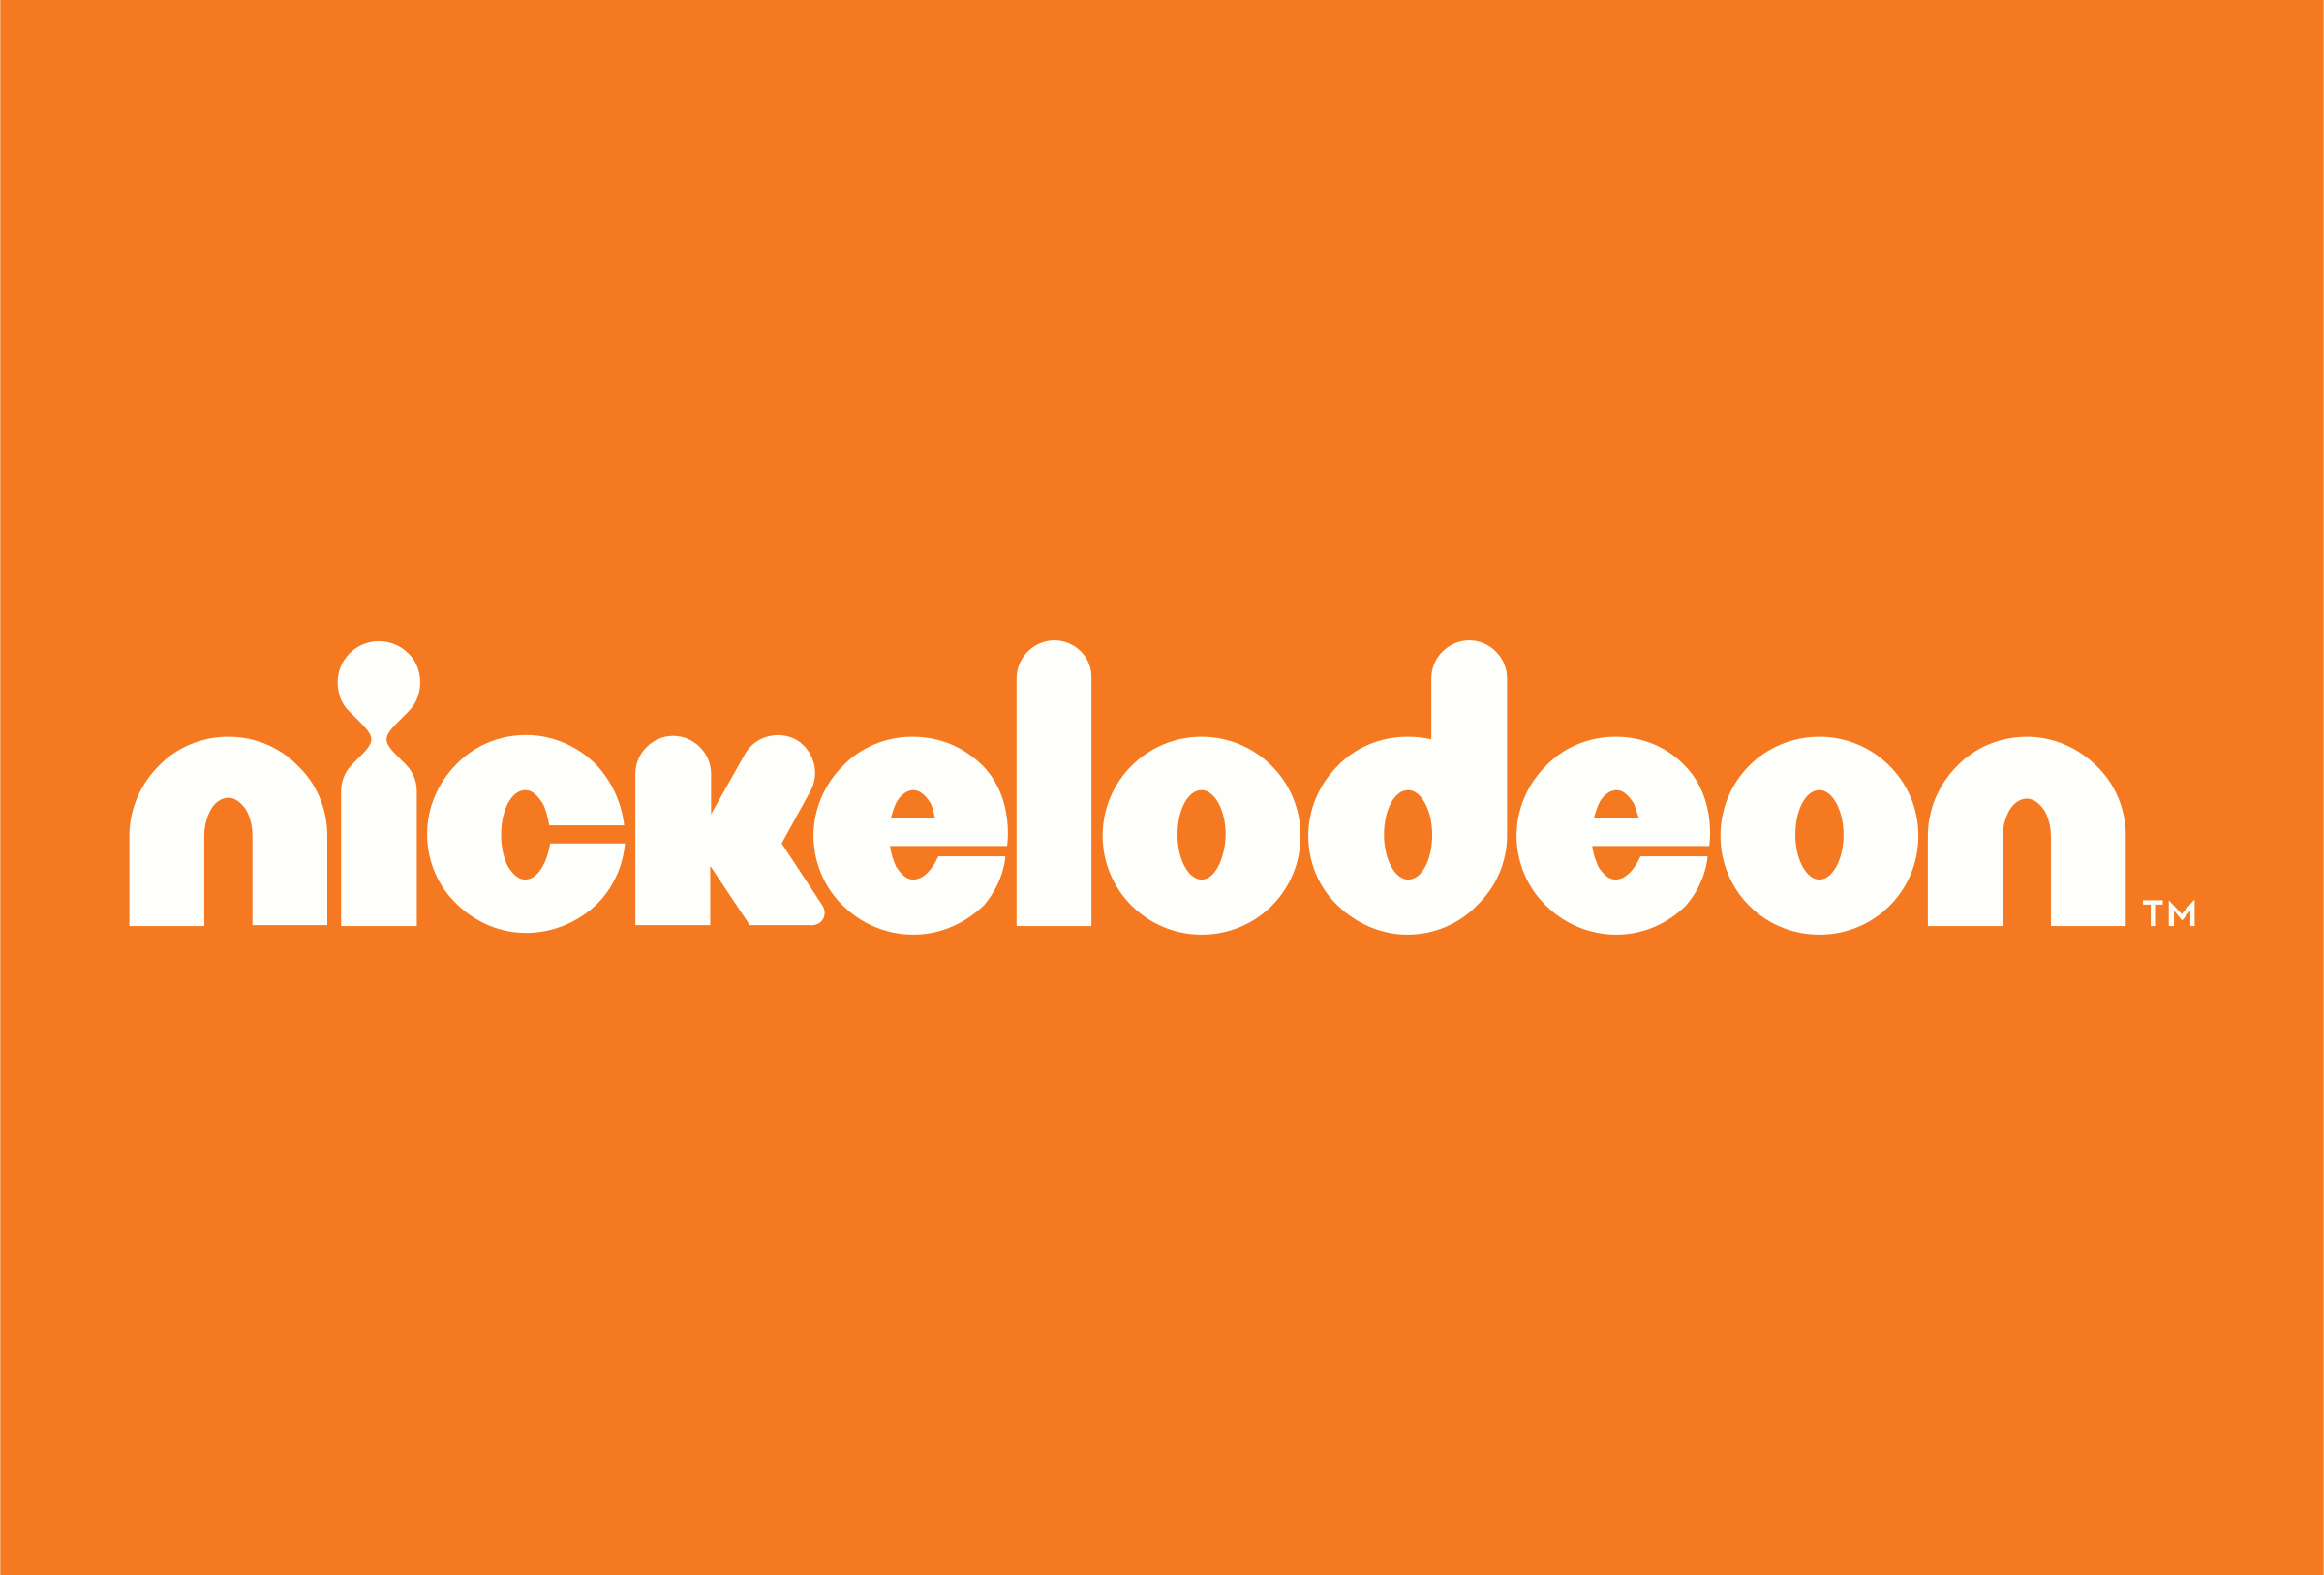 Nickolodeon Logo - Nickelodeon Logo PNG Transparent & SVG Vector - Freebie Supply